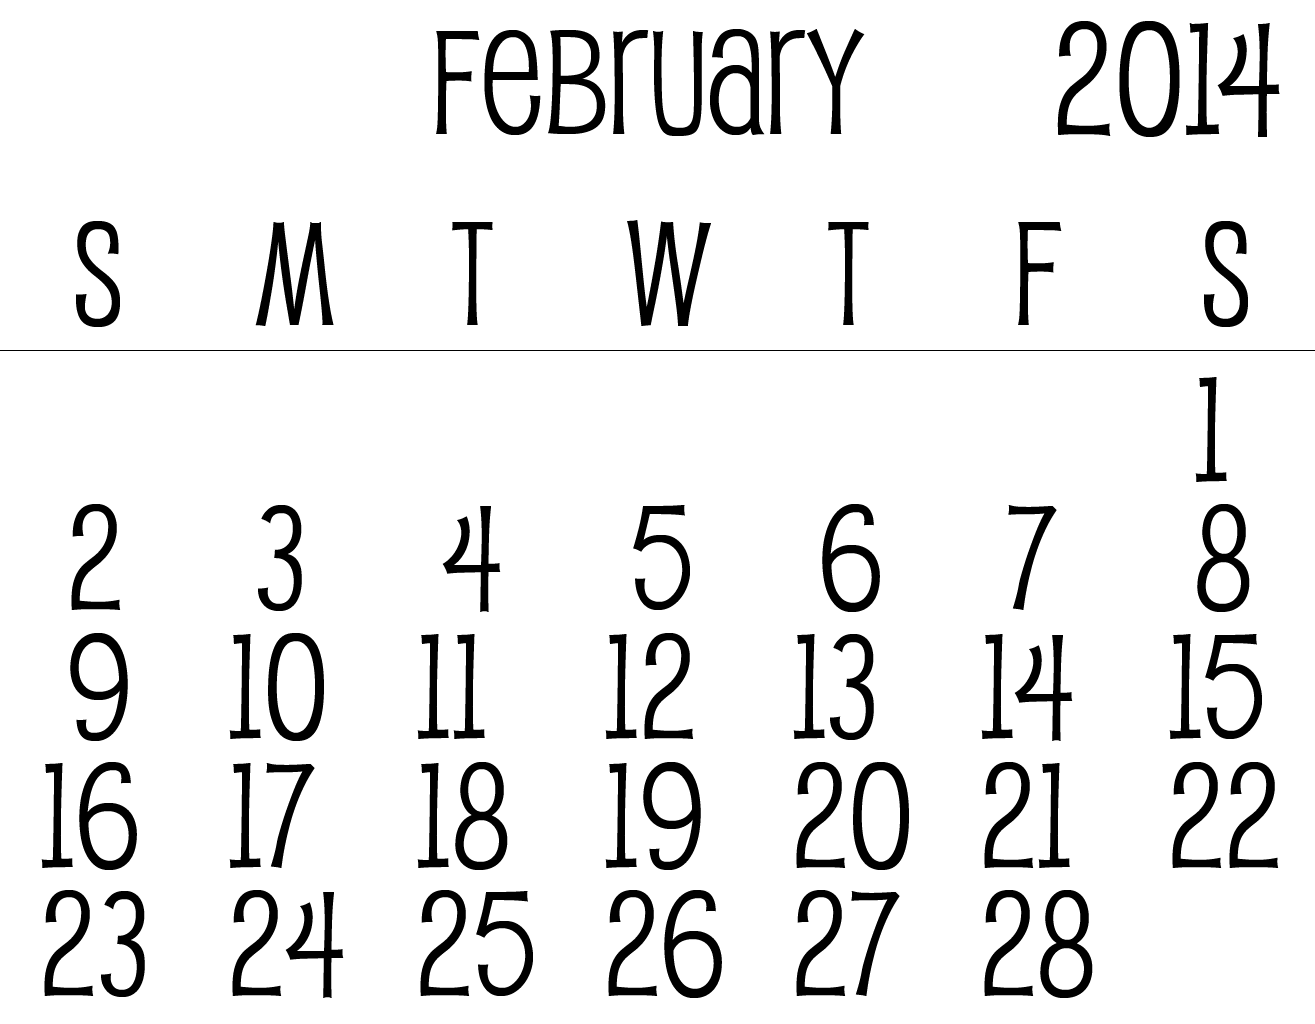 February 2014 Calendar HD Wallpaper Free Download PDF Excel Word JPEG